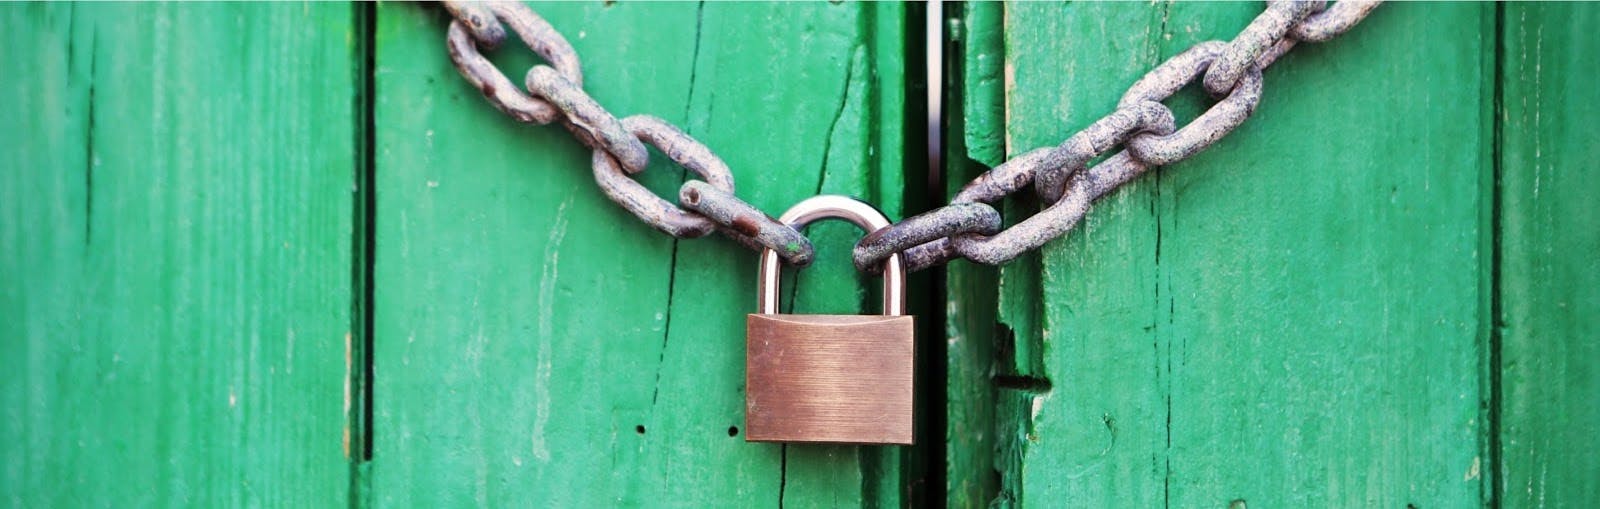 Secure lock on green gate.